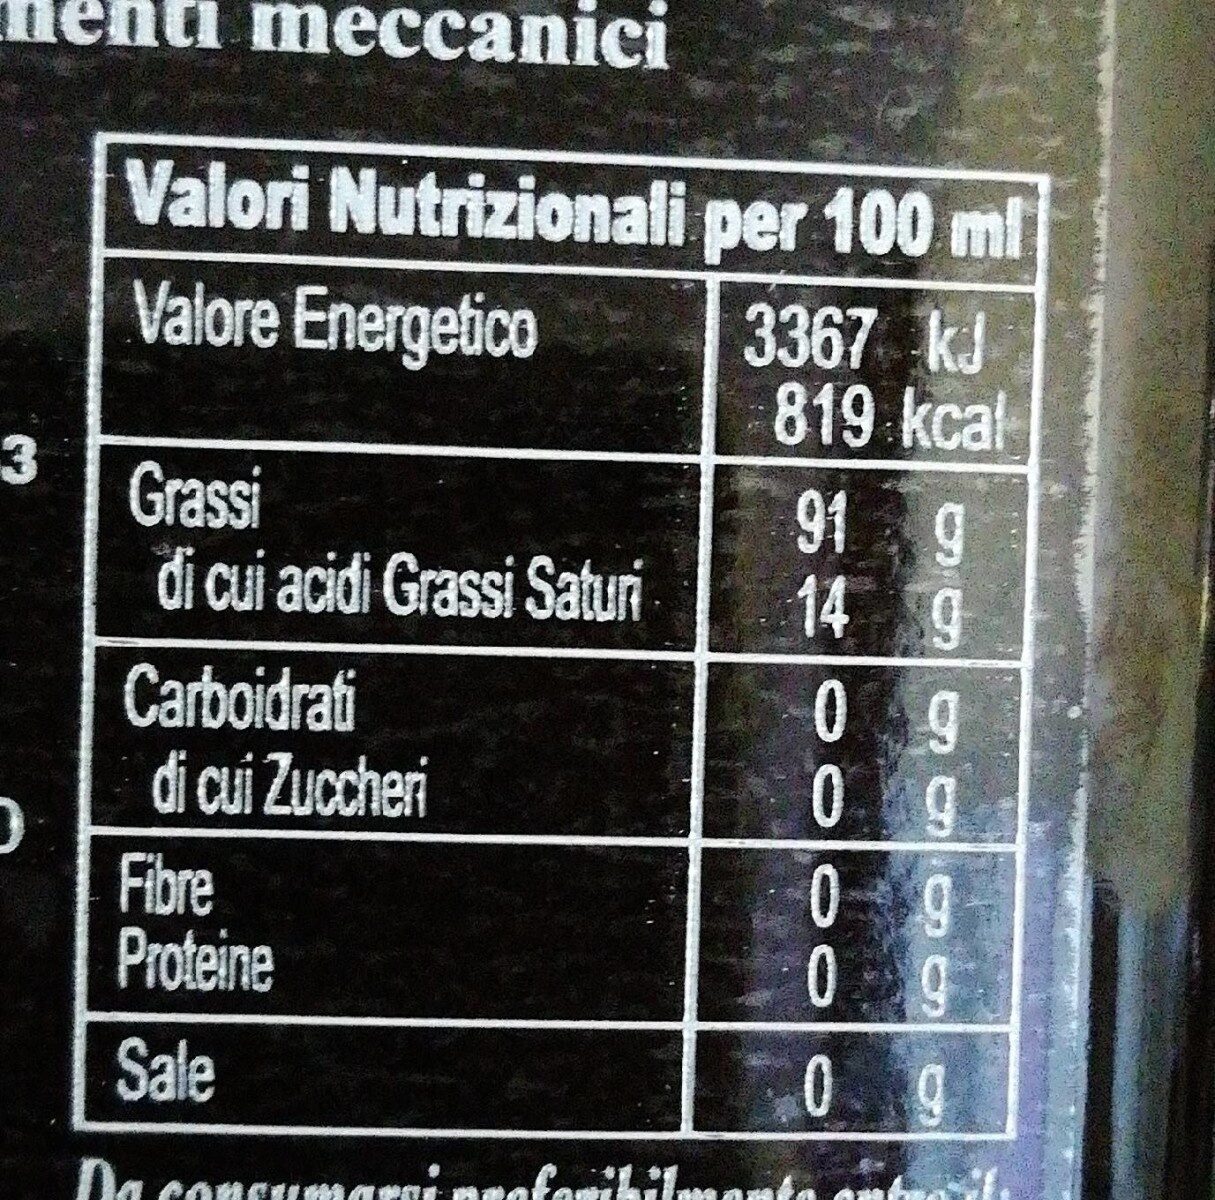 Olio extravergine di oliva Panetti - Nutrition facts - it